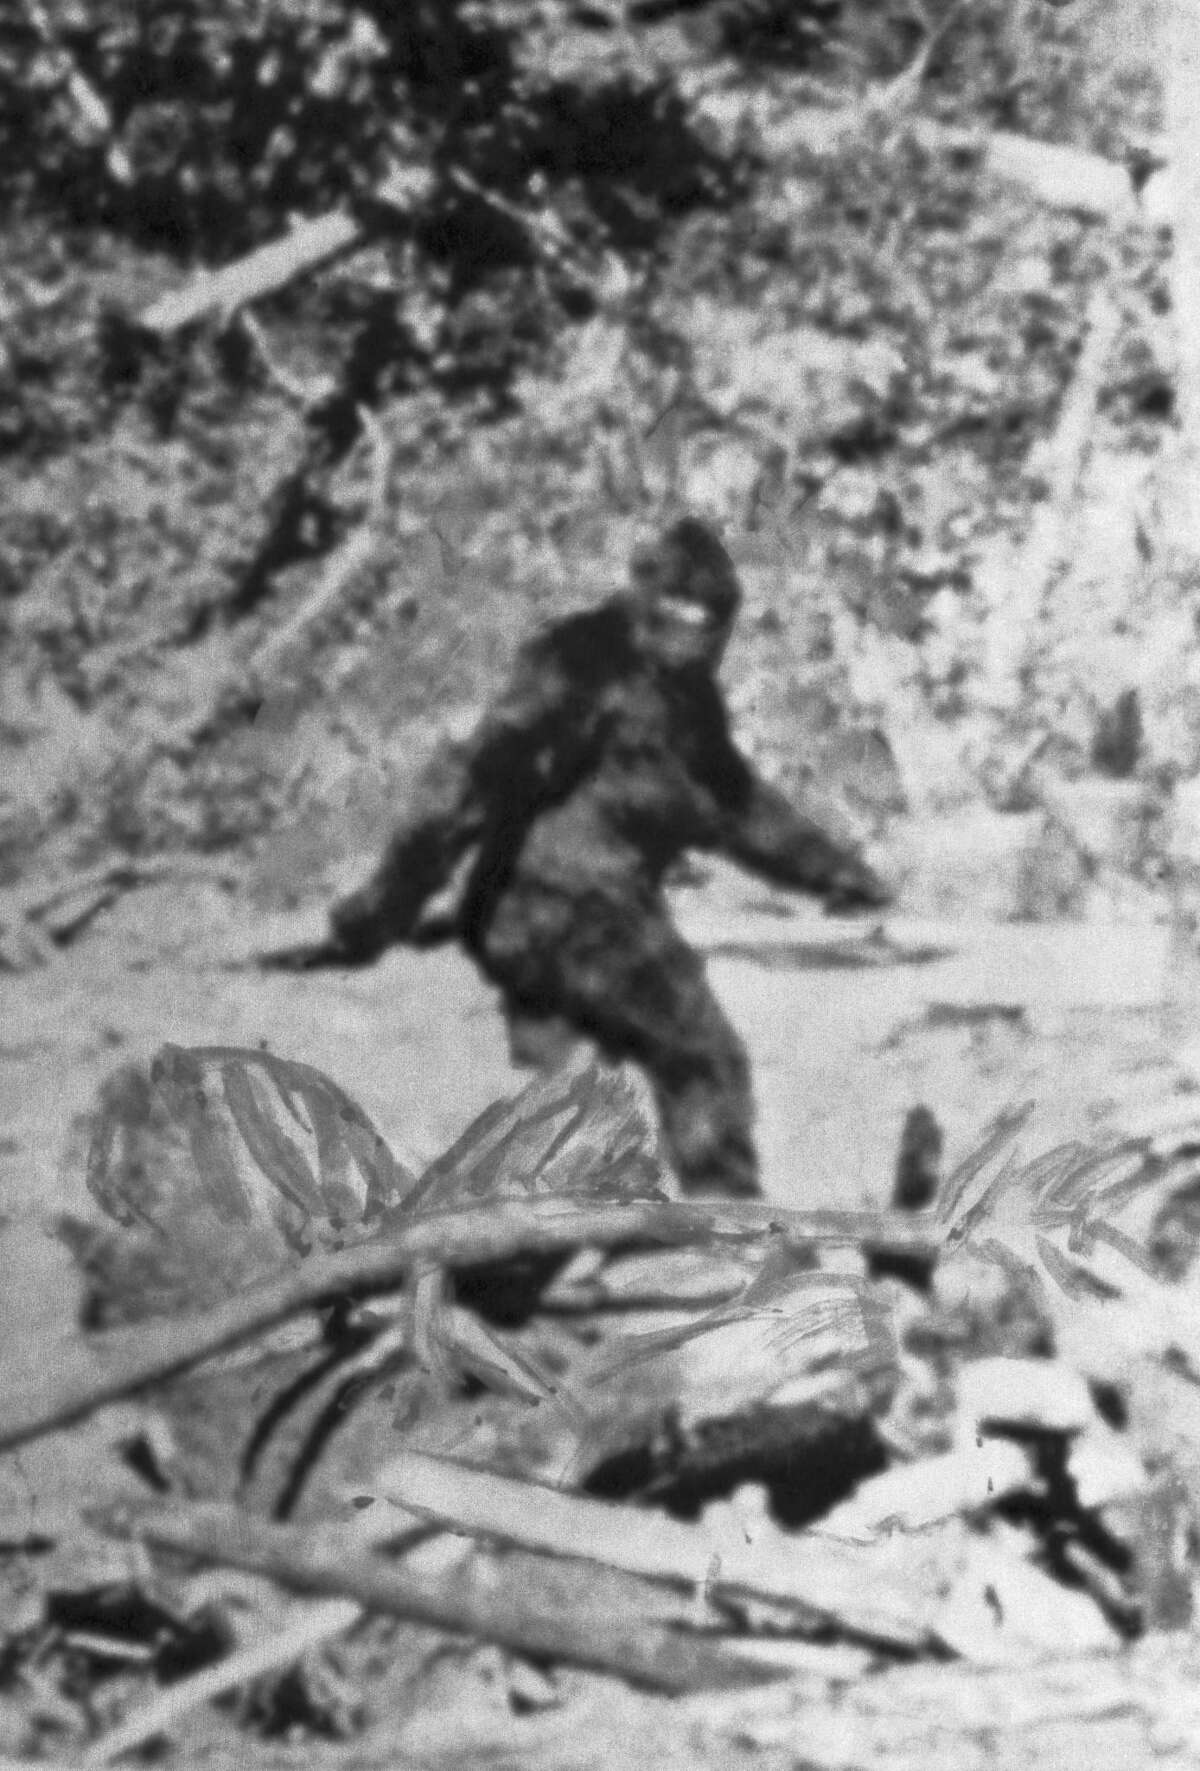 Bigfoot Encounter Leaves Man in Shock